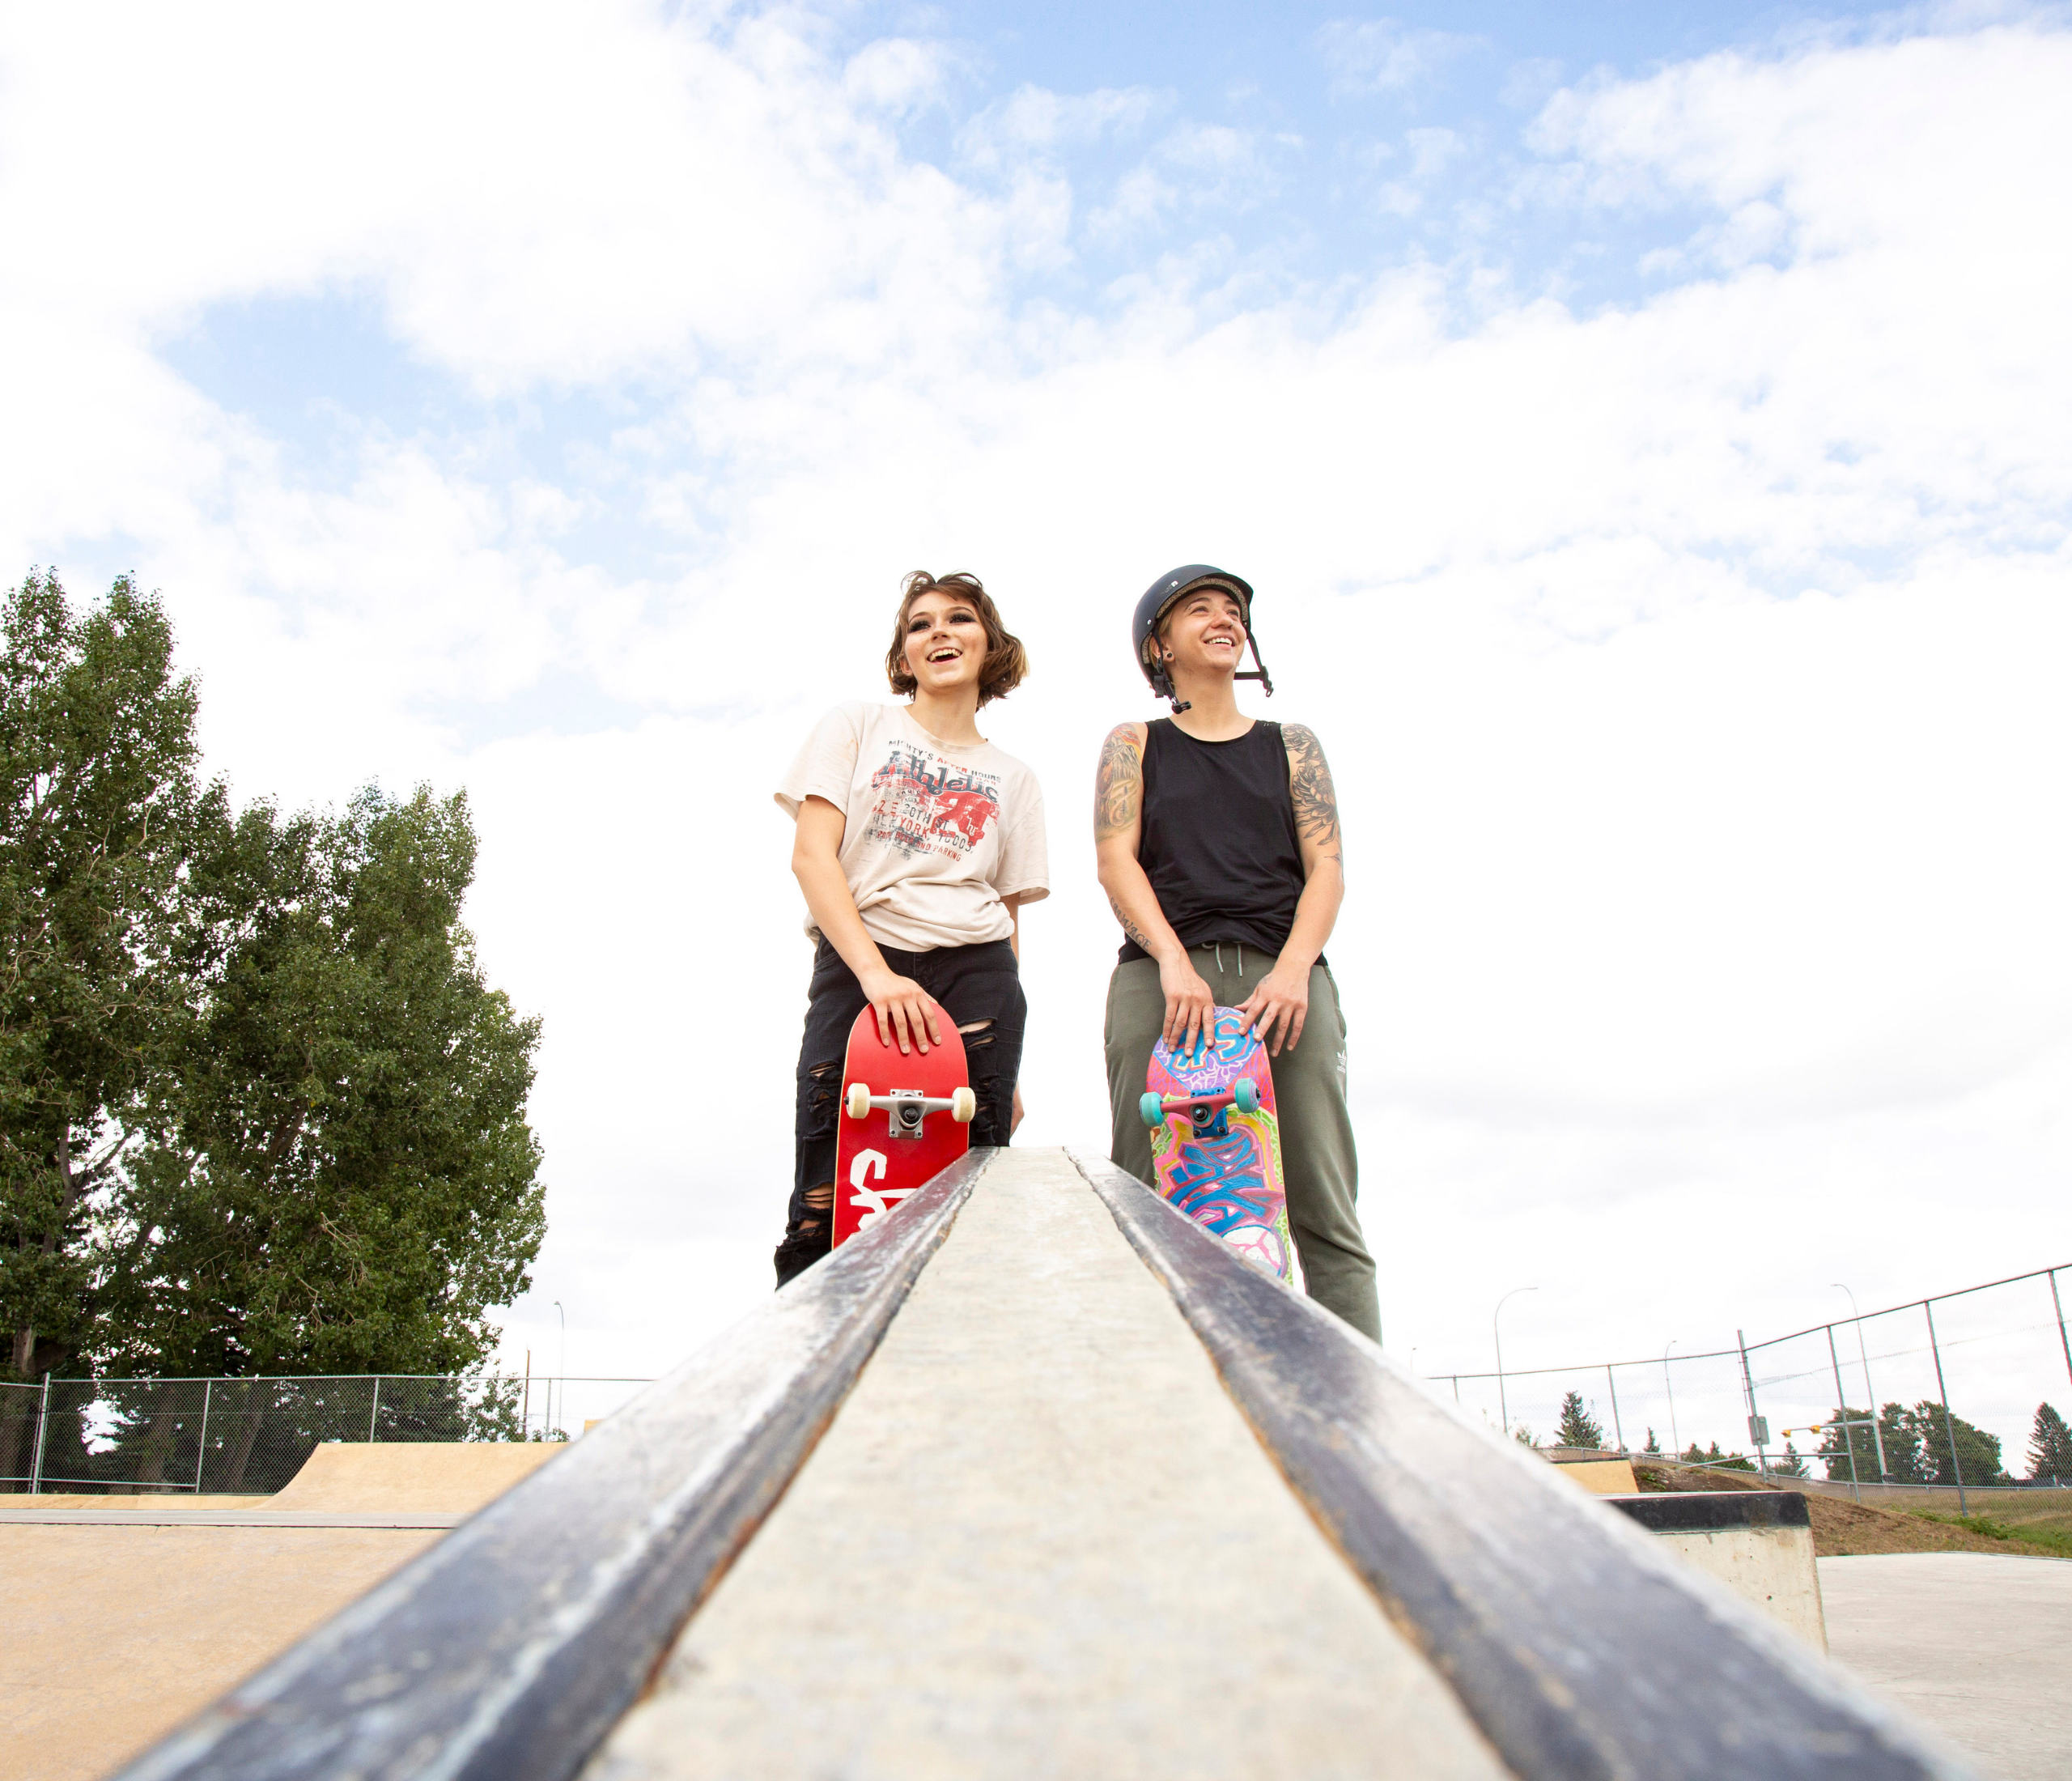 Mentor and mentee skateboarding together